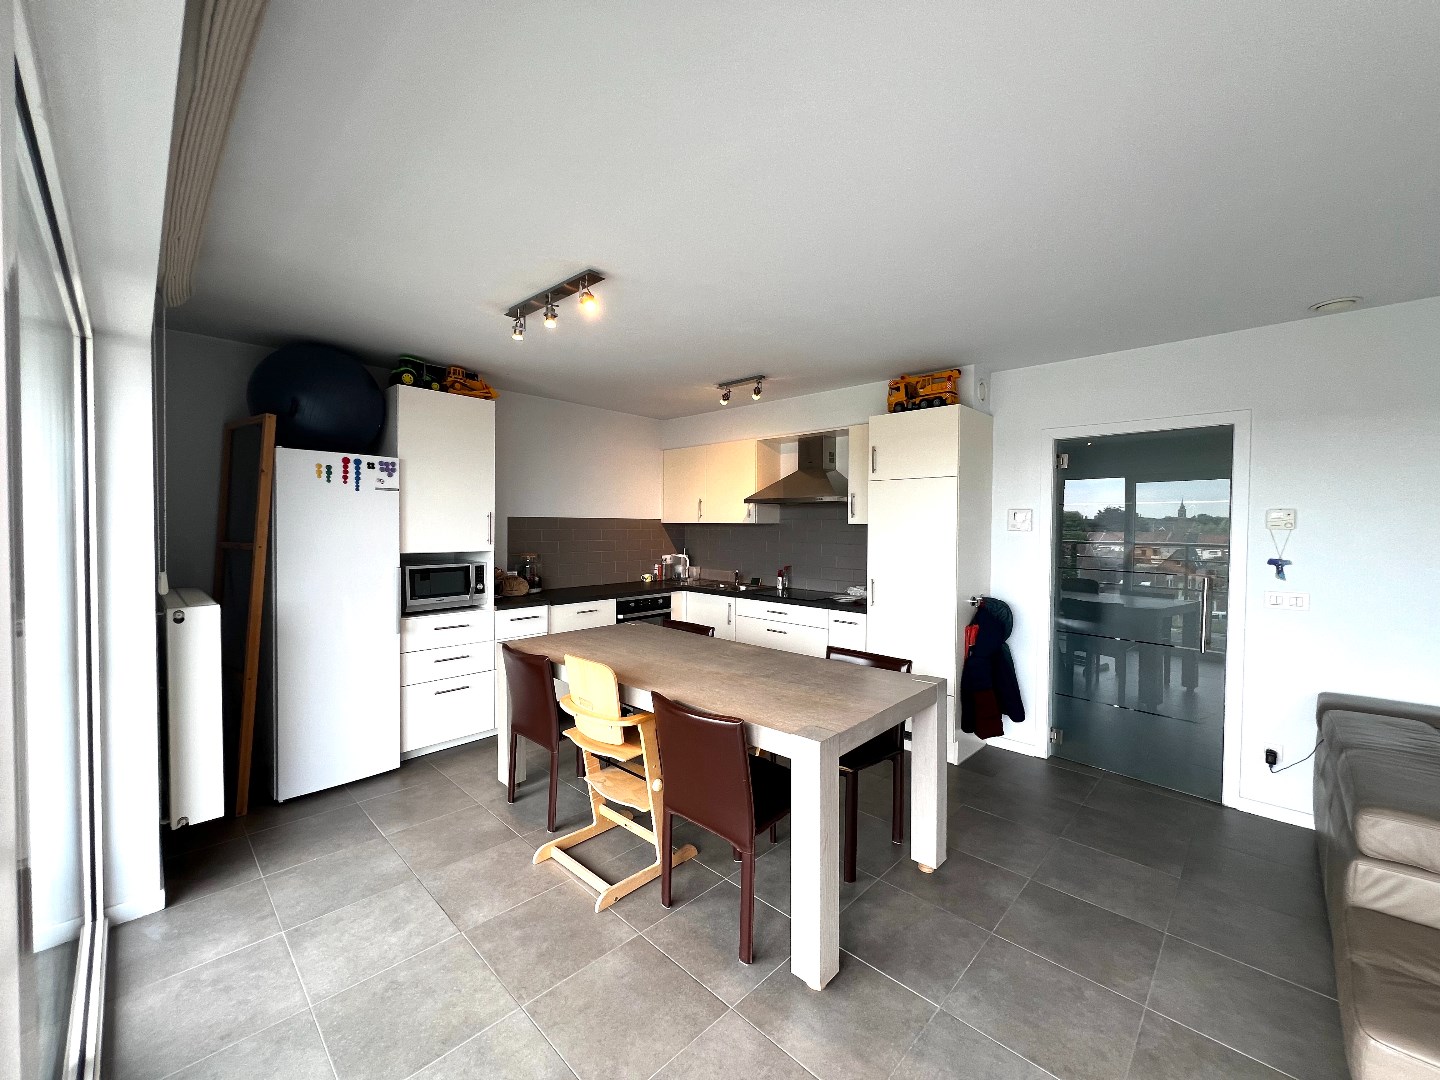 Instapklaar appartement met 2 slaapkamers, autostandplaats en kelderberging te koop te Harelbeke! foto 6